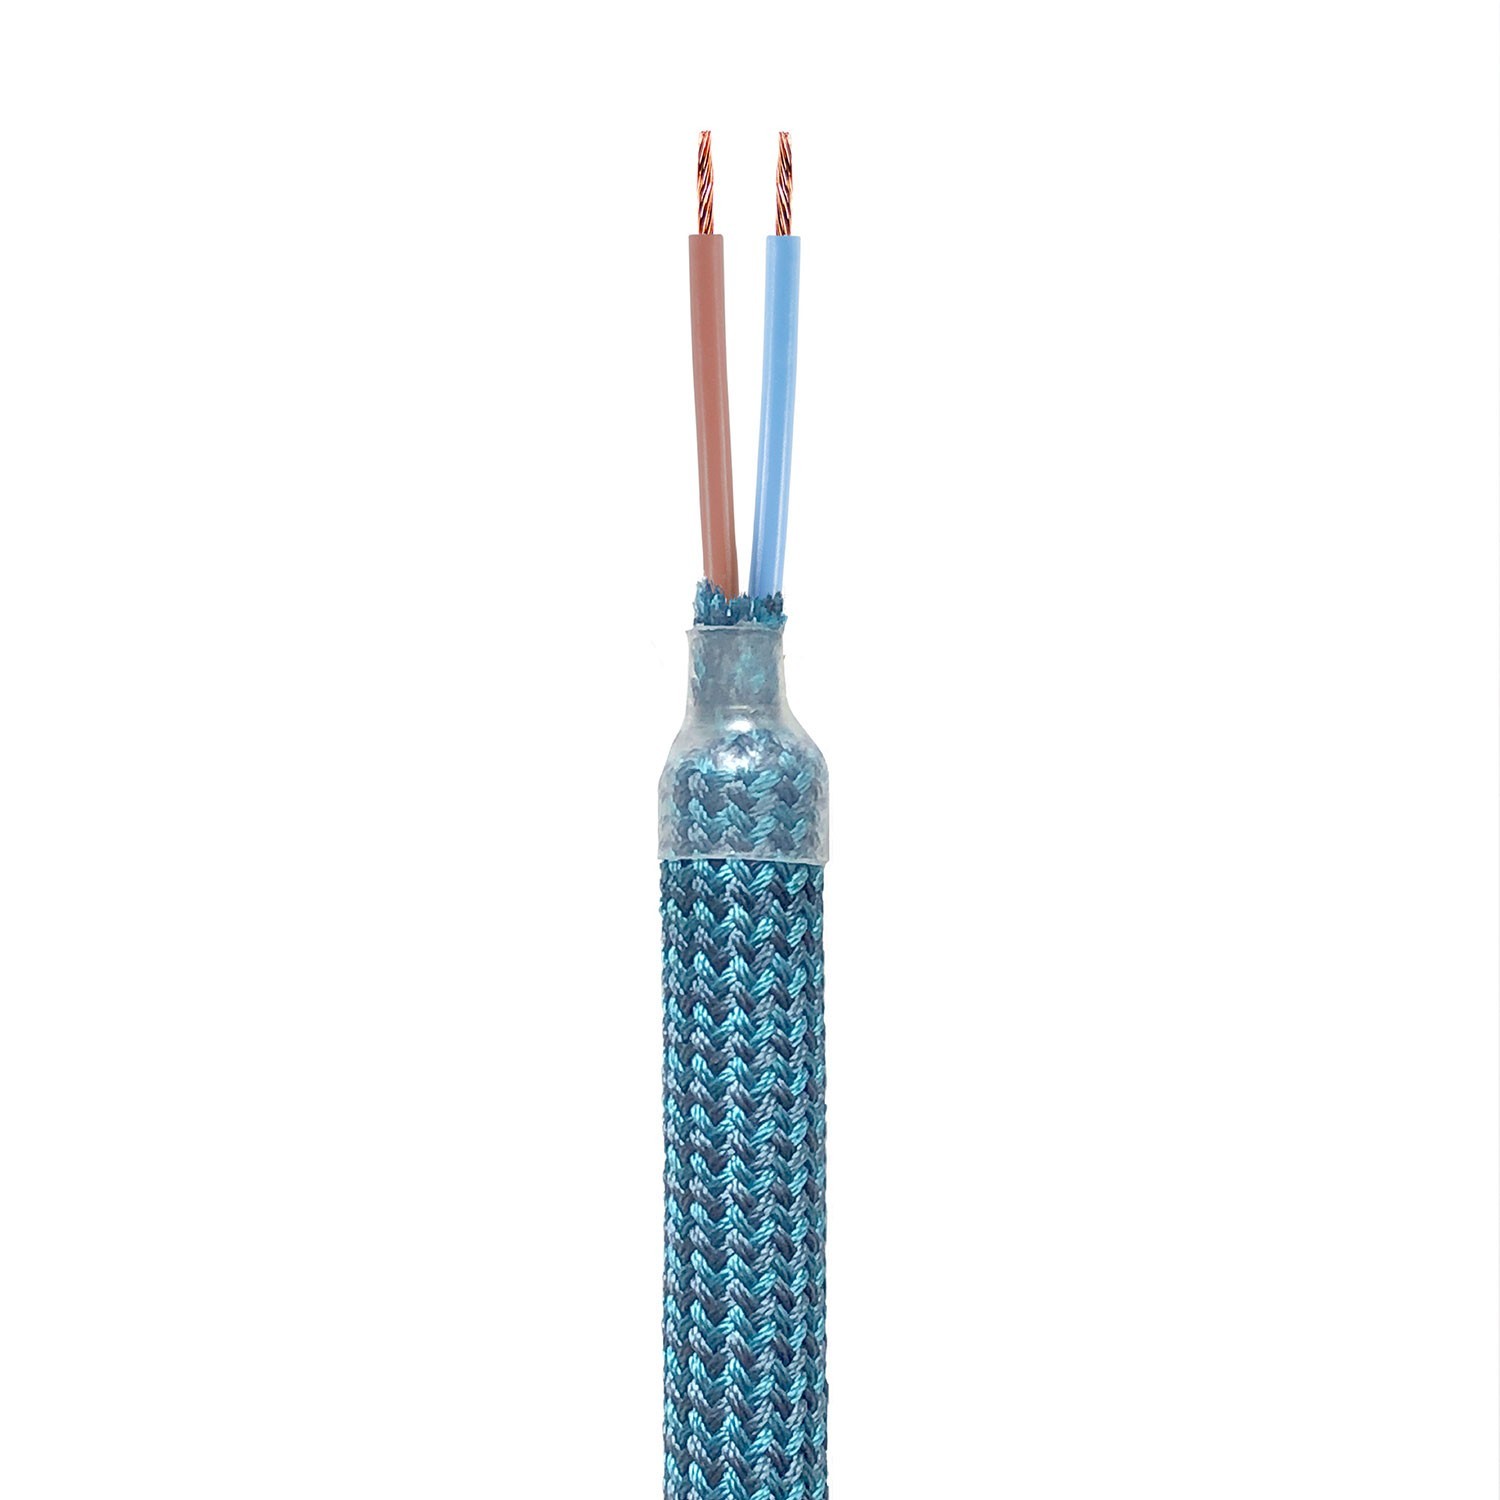 Creative Flex flexible tube in petrol blue RM78 textile lining